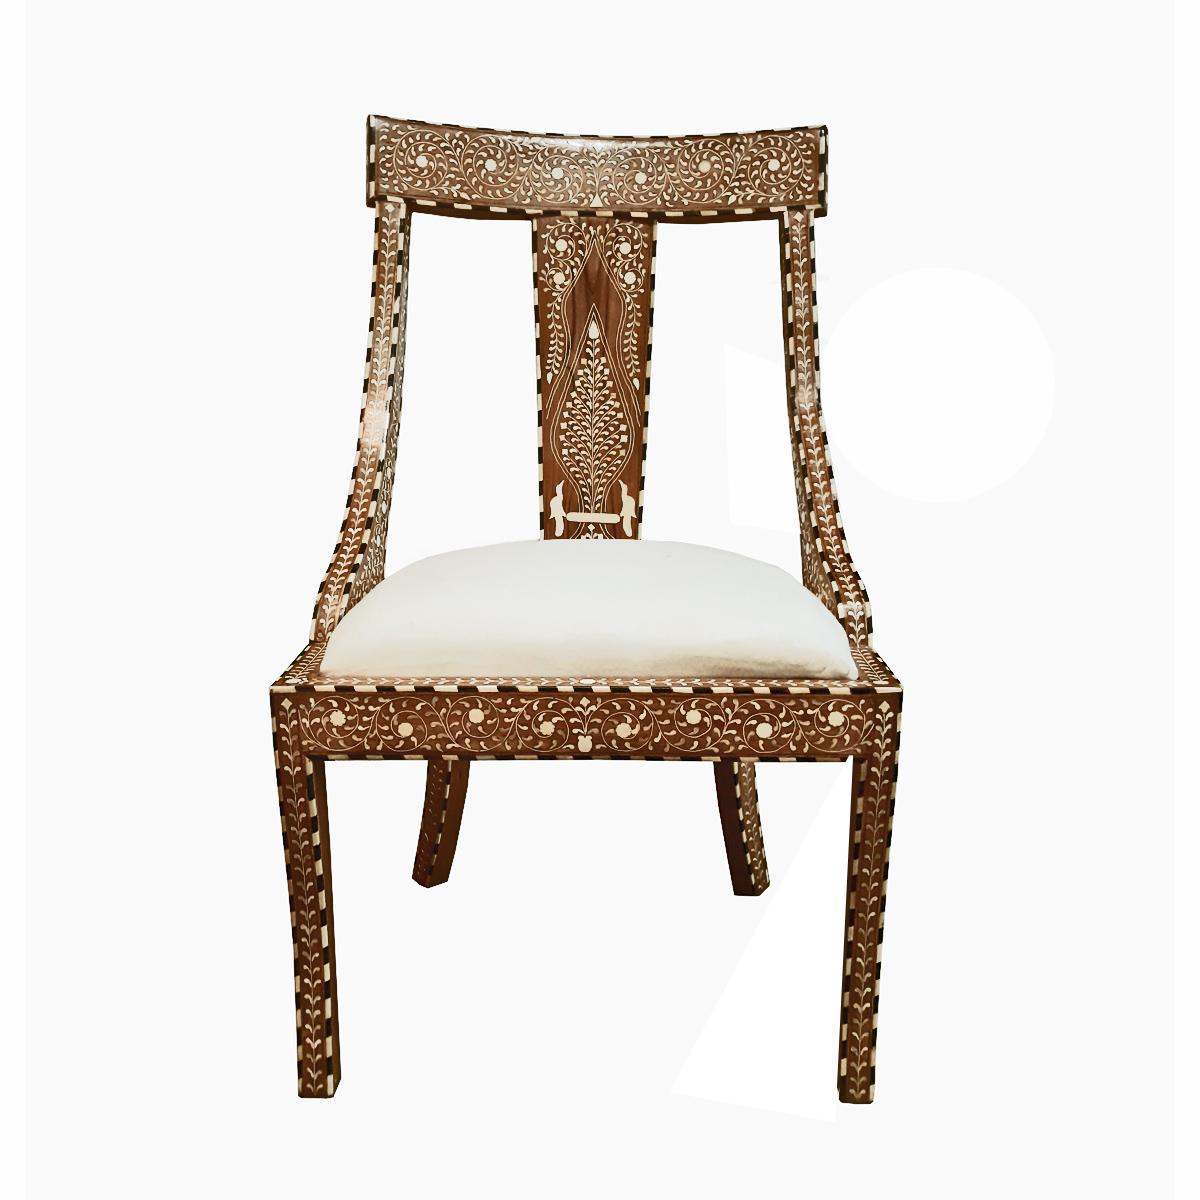 Indian Bone-Inlaid Armless Chair with Cushion